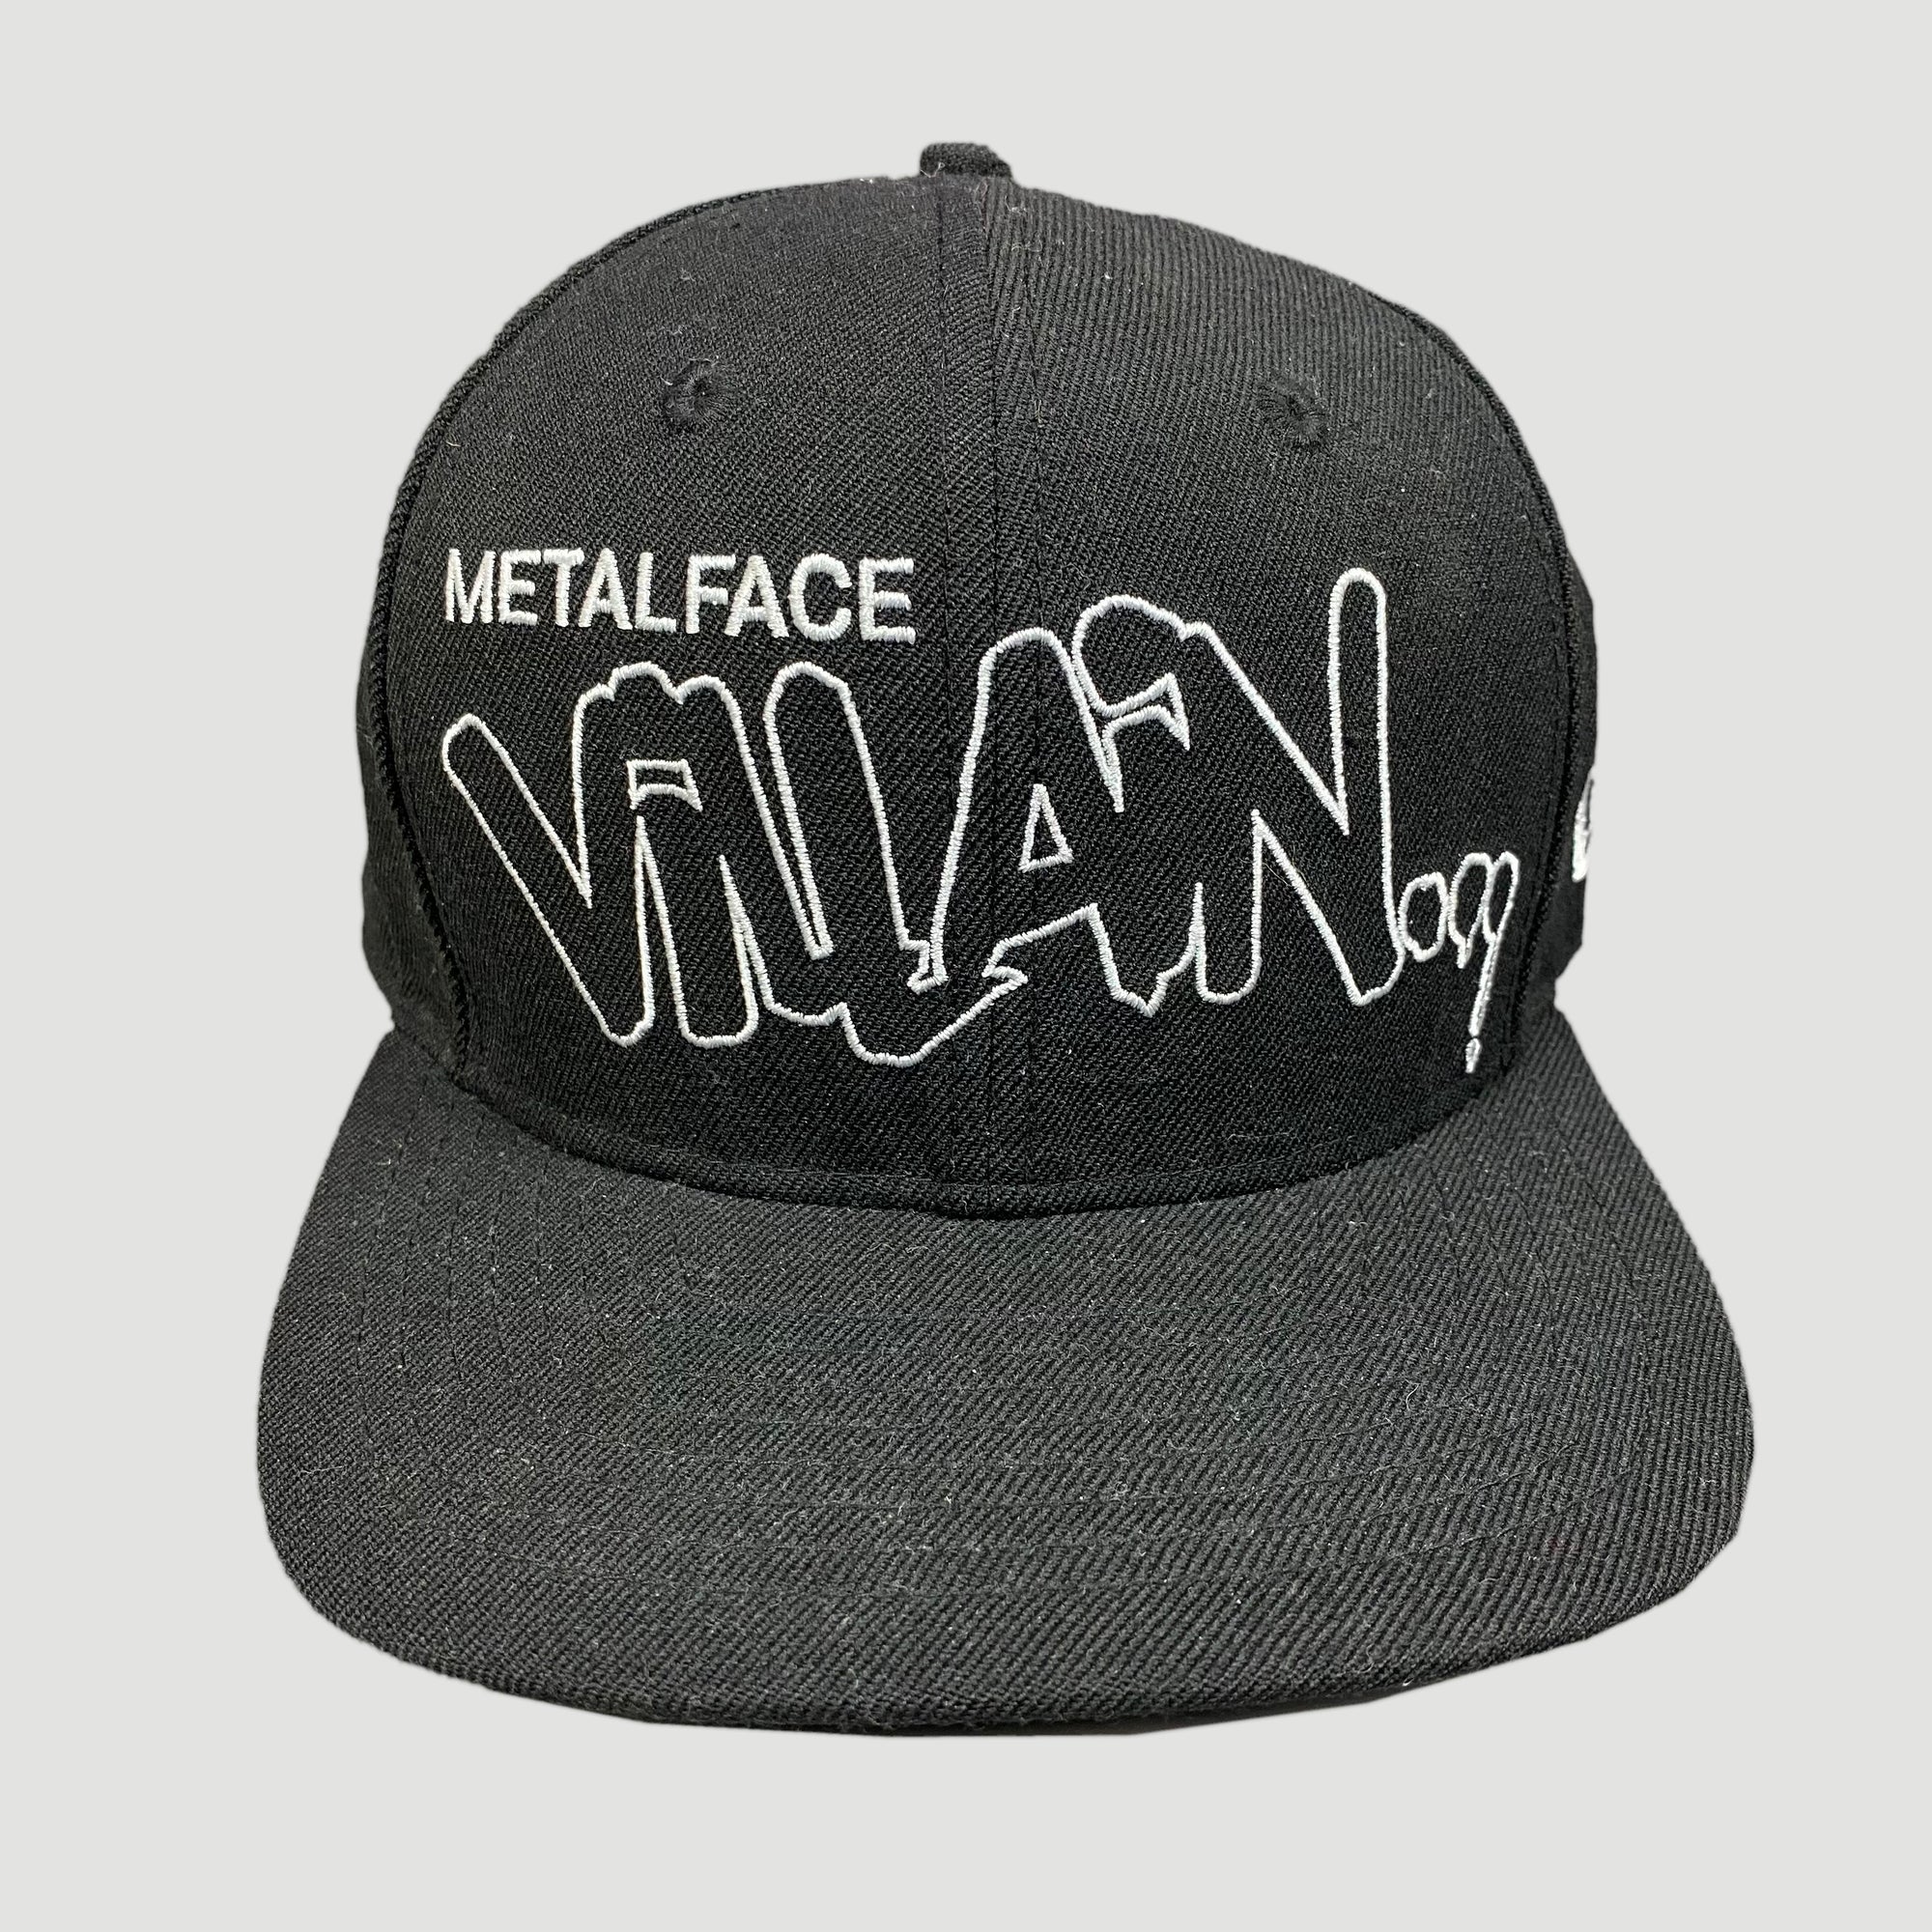 2010's METAL FACE VILLAIN New Era Cap